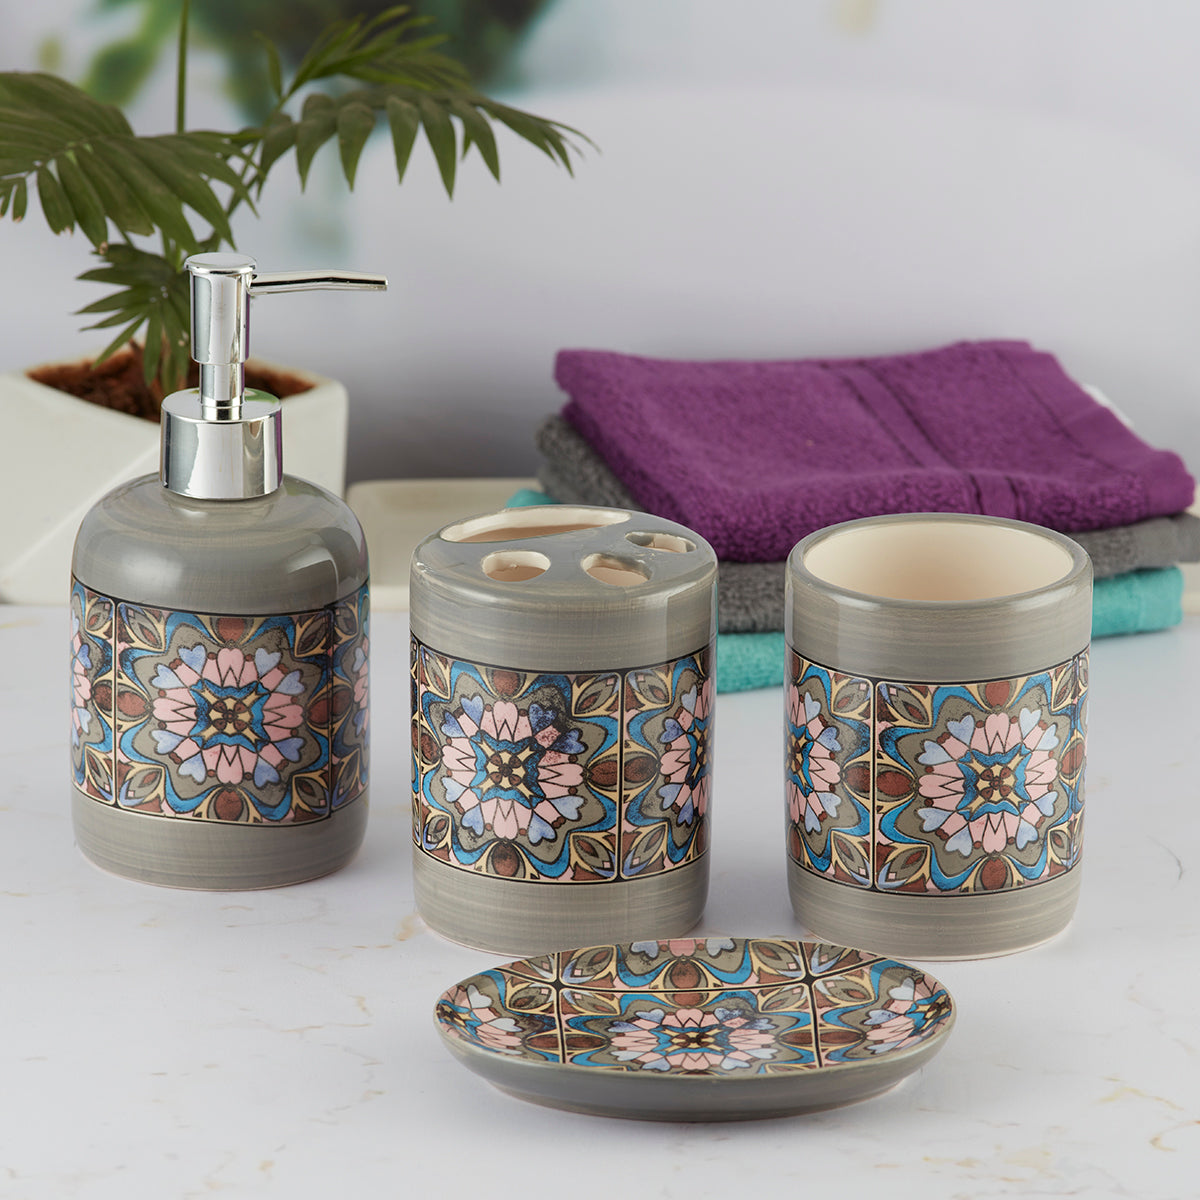 Ceramic Bathroom Accessories Set of 4 Bath Set with Soap Dispenser (9732)